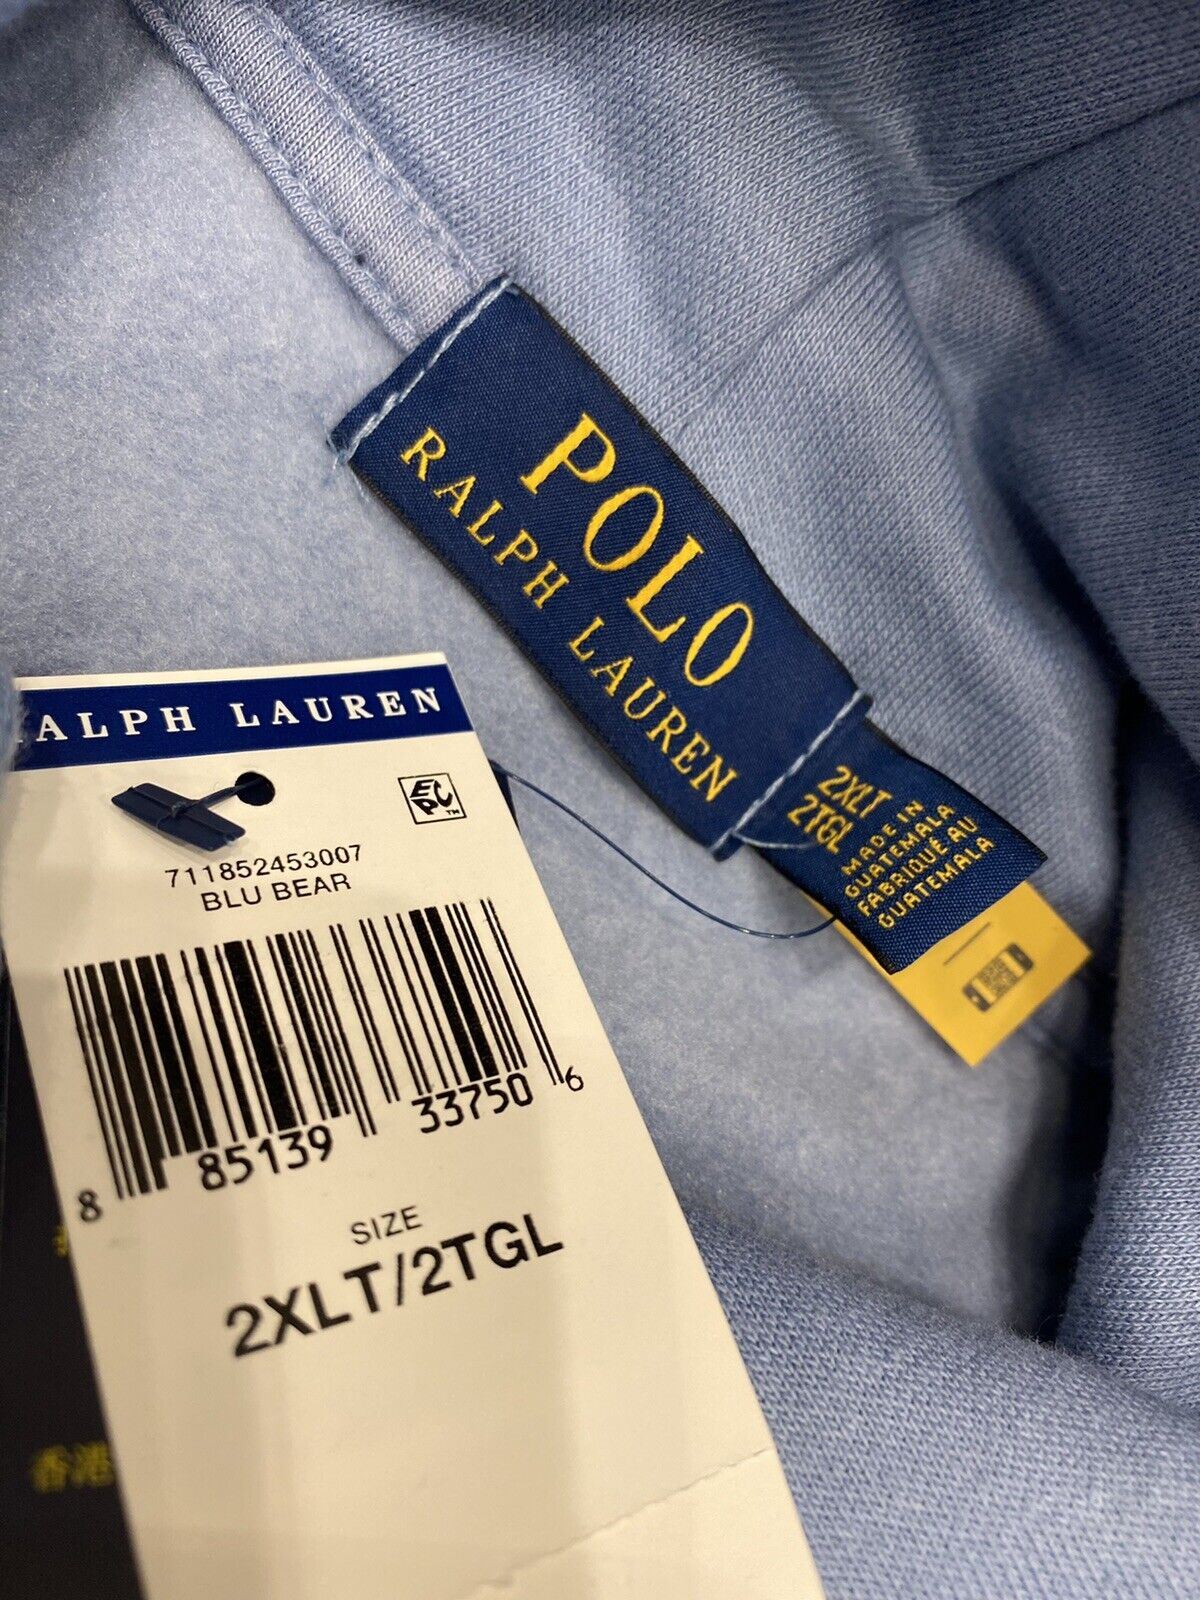 New $188 Polo Ralph Lauren Long Sleeve Bear Sweater with Hoodie Blue 2XLT/2TGL